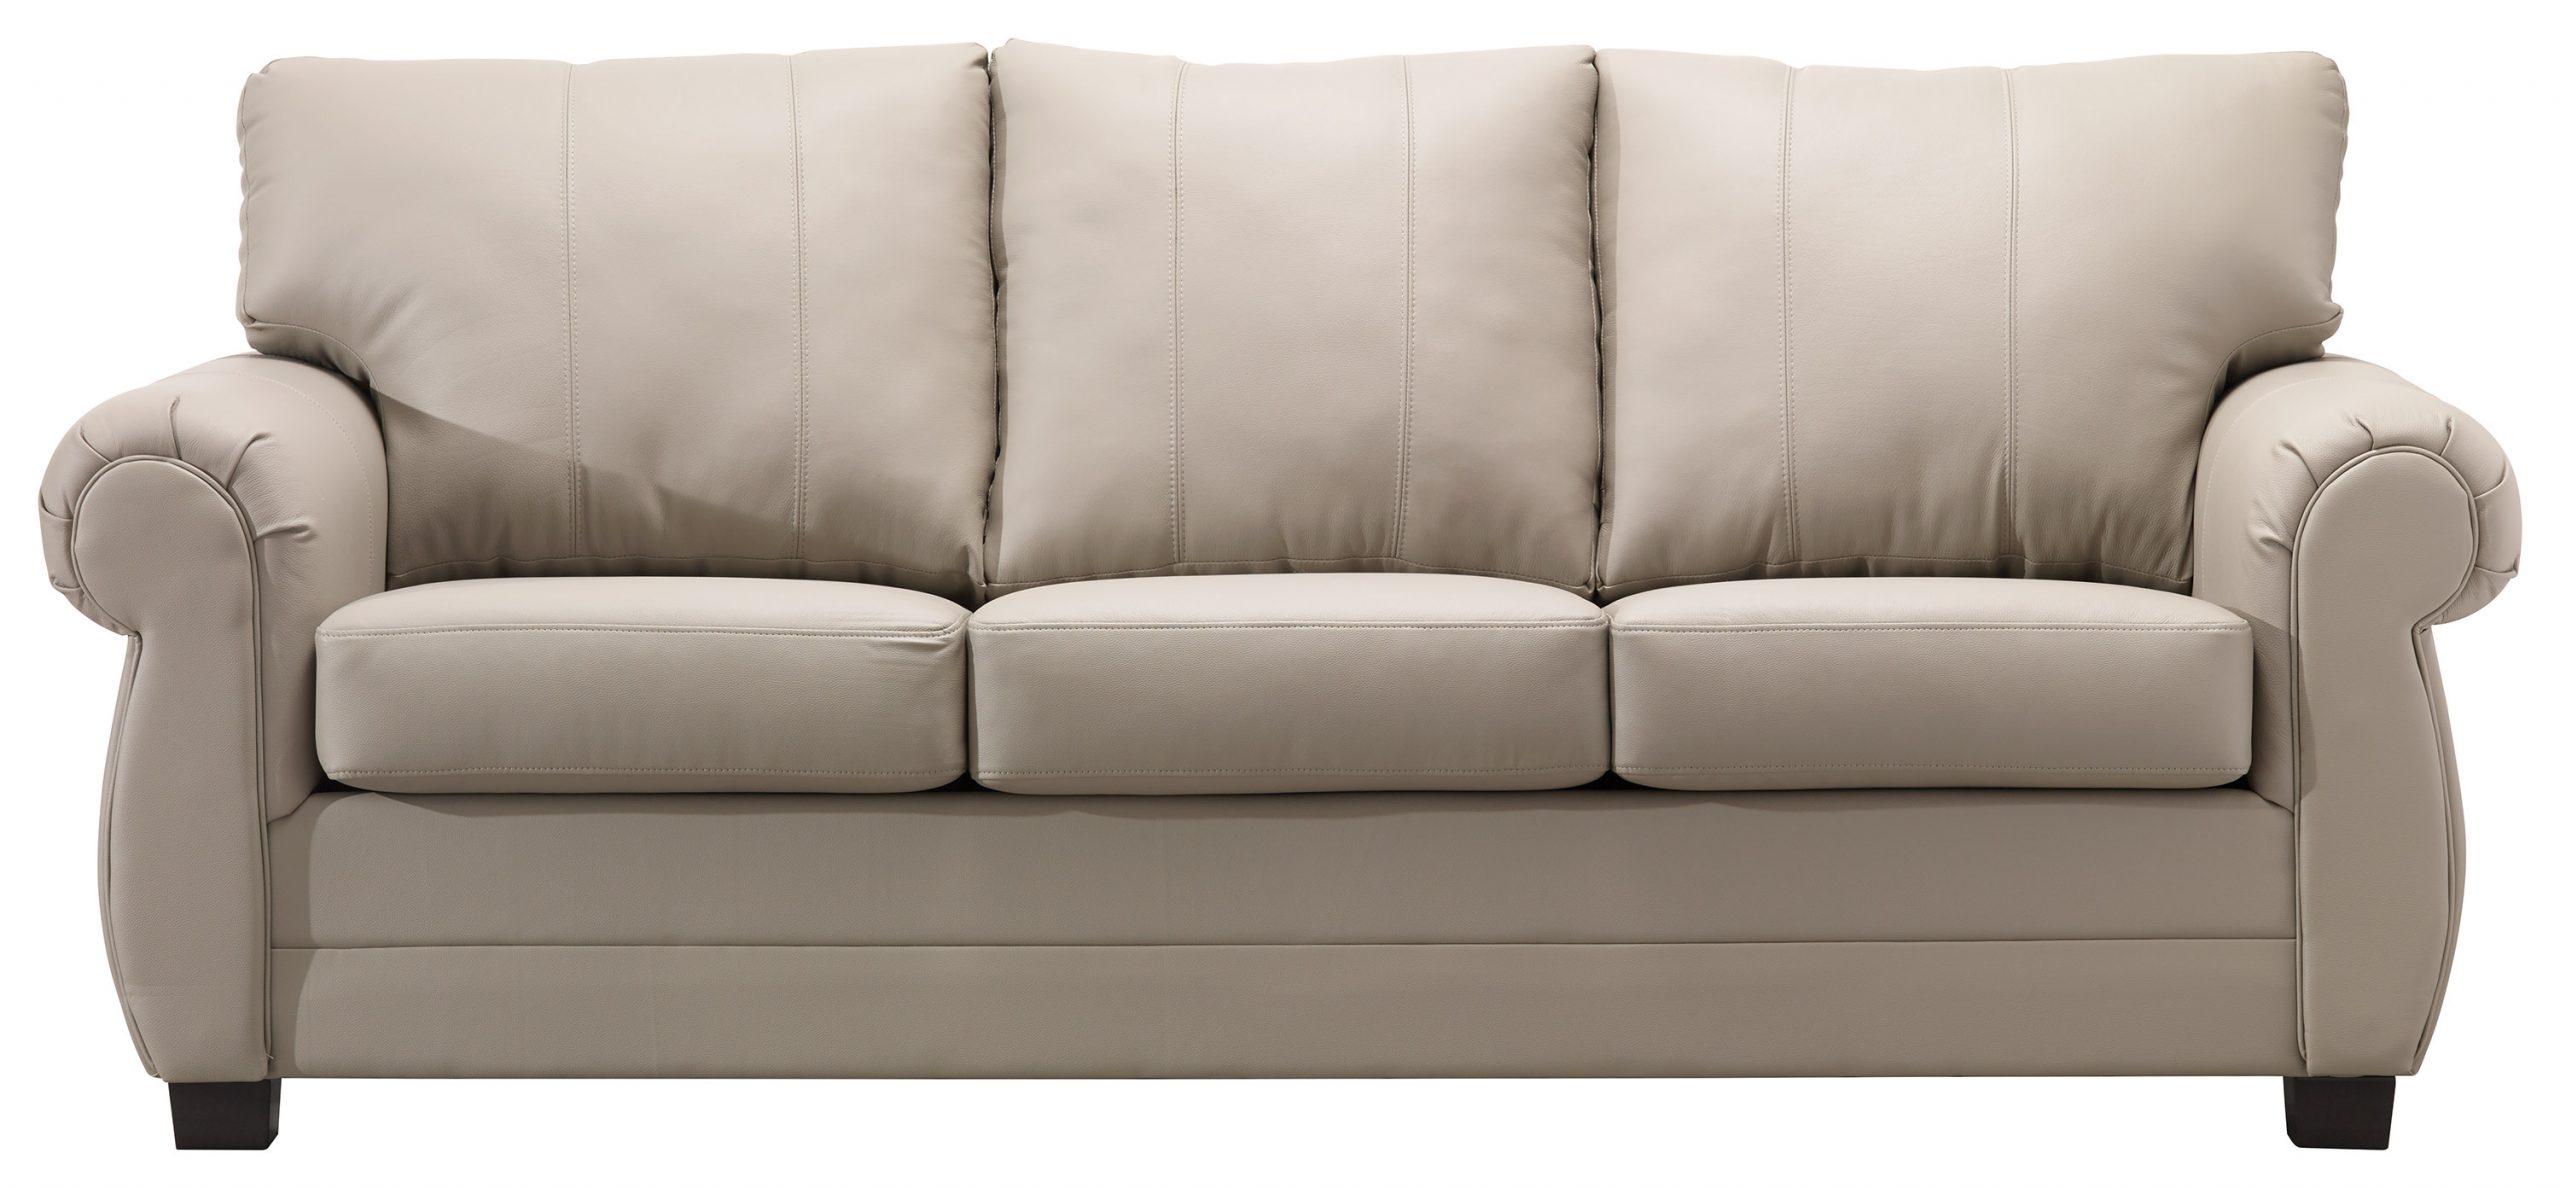 gray leather sofa vcf